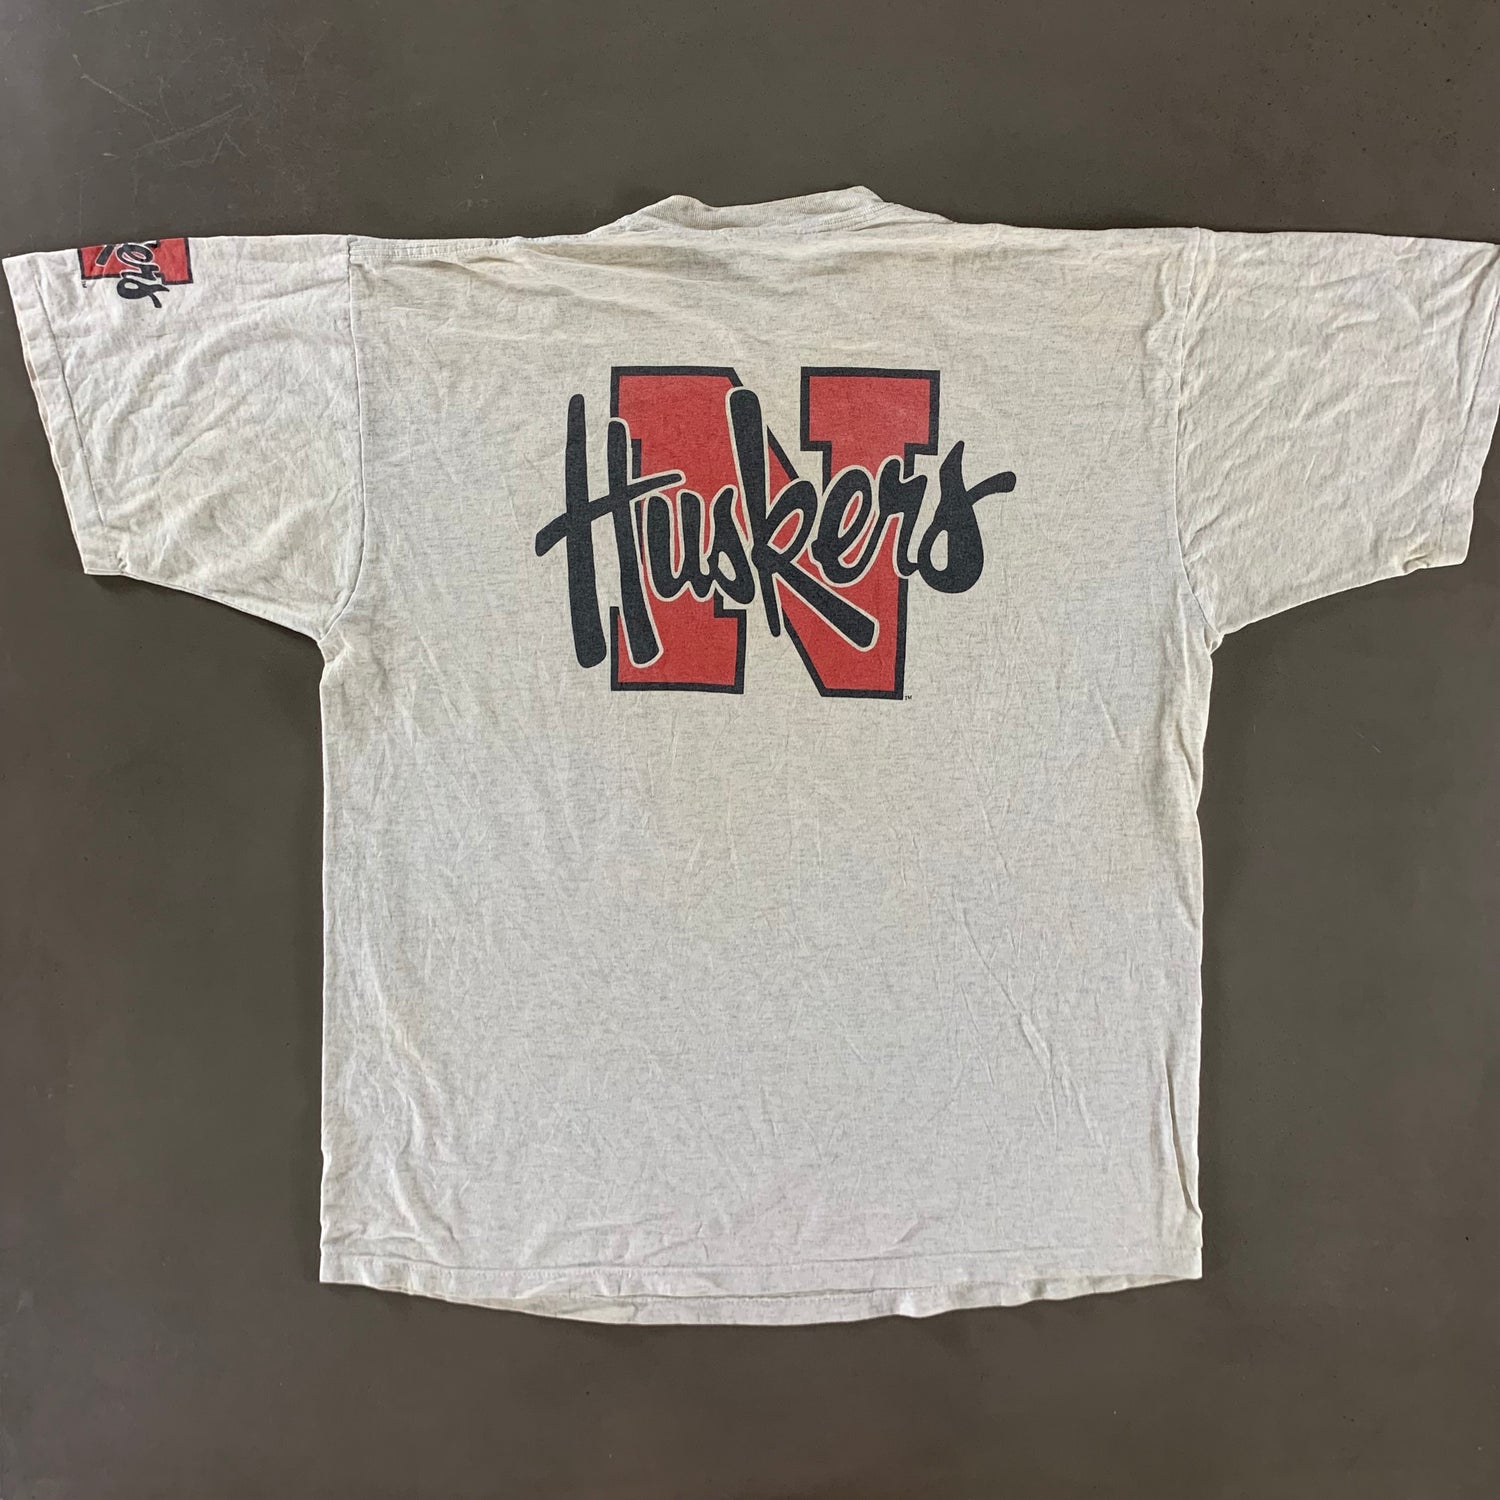 Vintage 1998 Nebraska Huskers T-shirt size XL